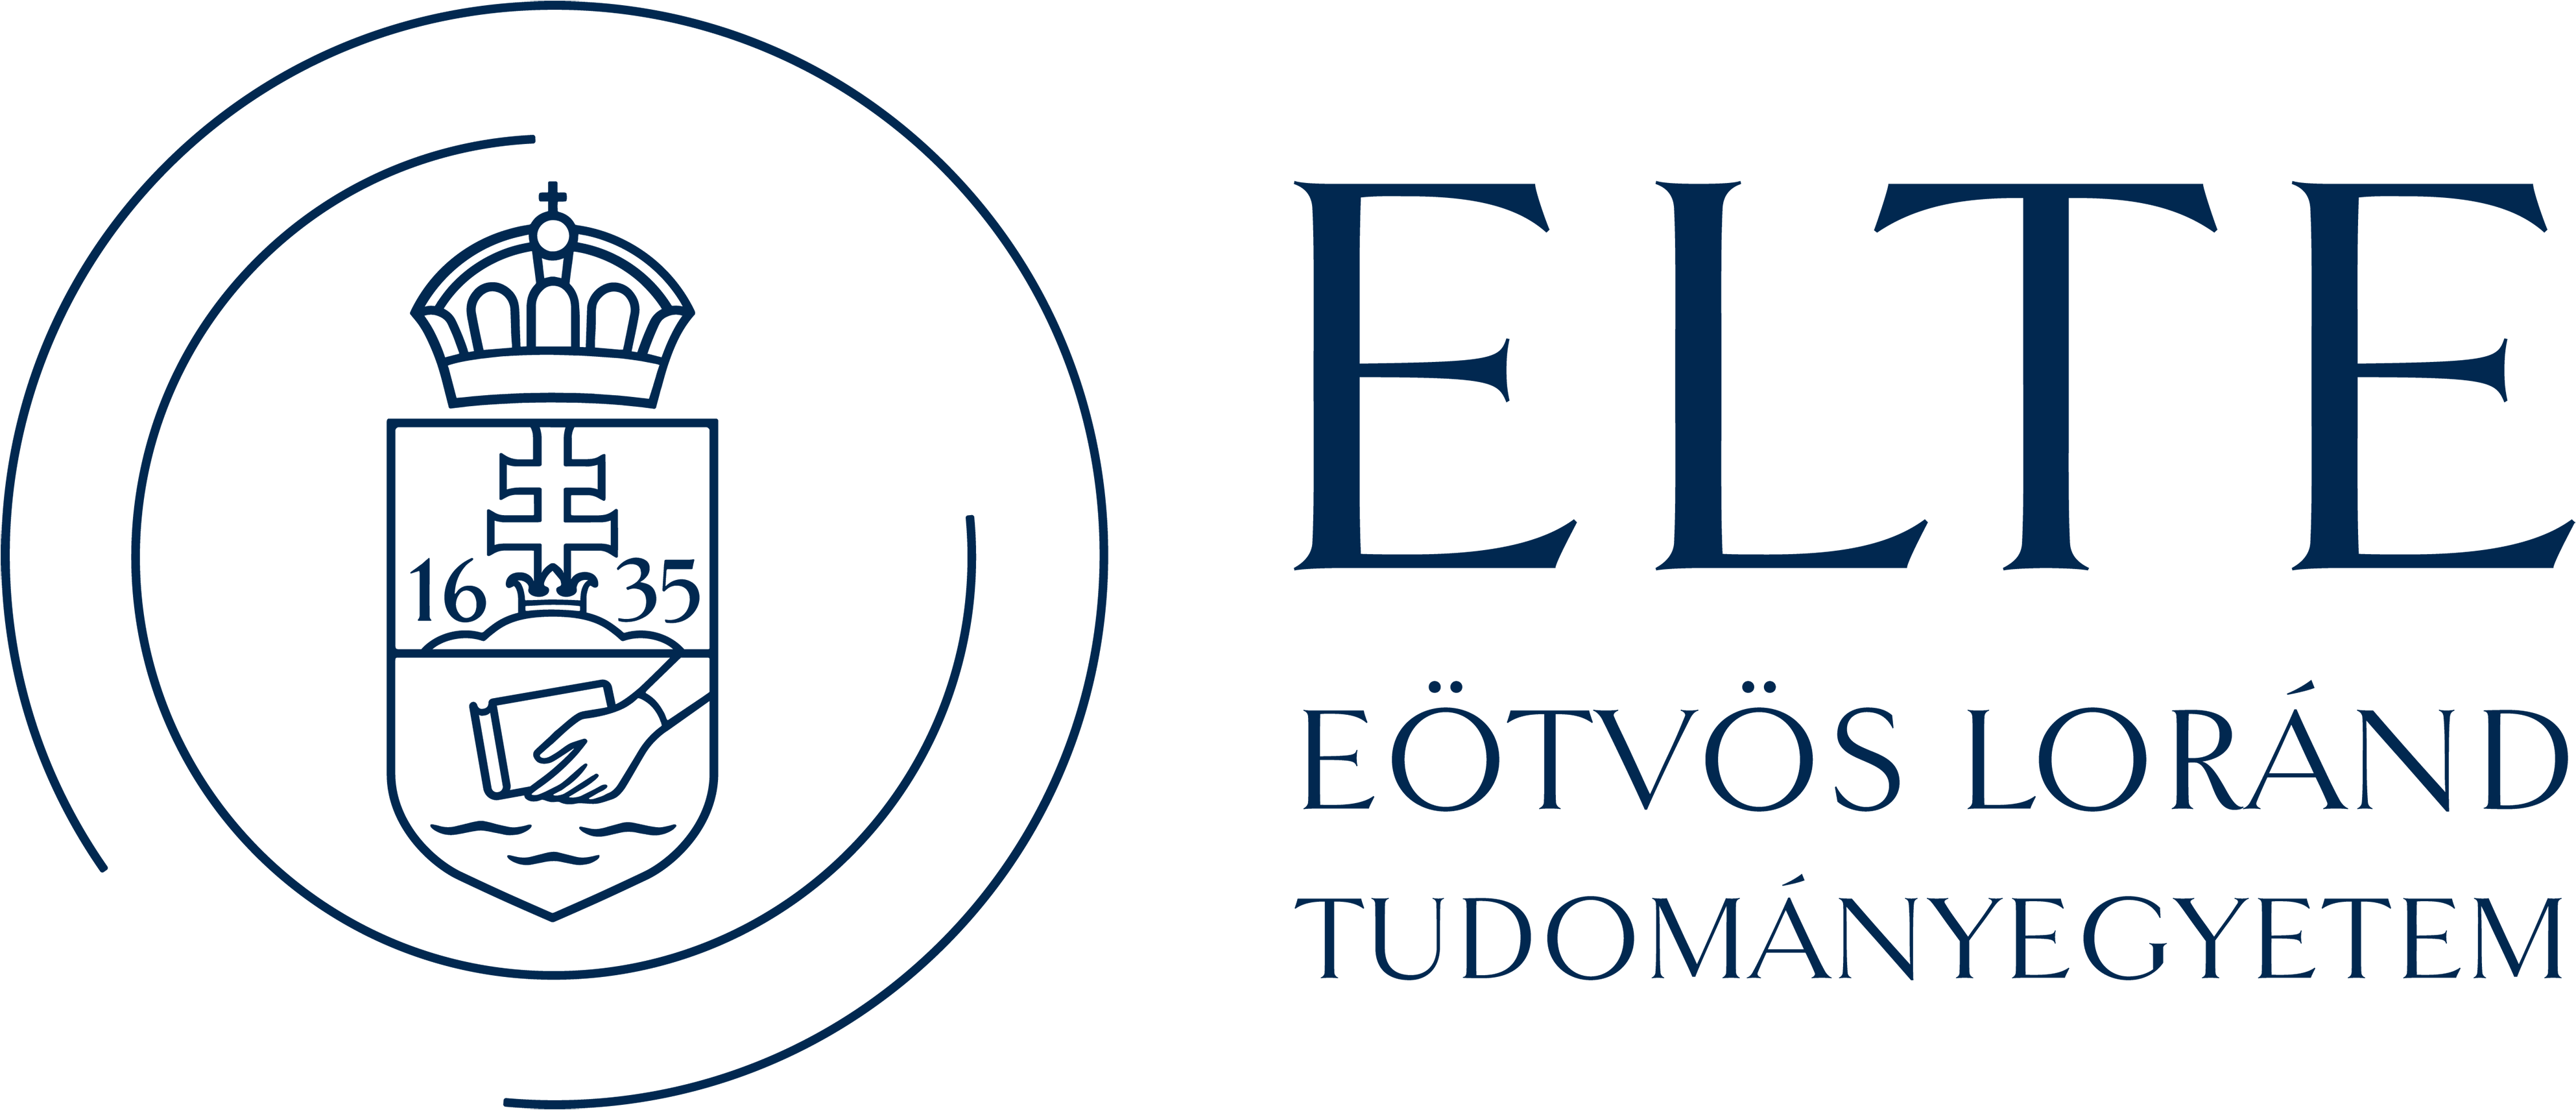 Eötvös Loránd University – ATEE 2023 Annual Conference